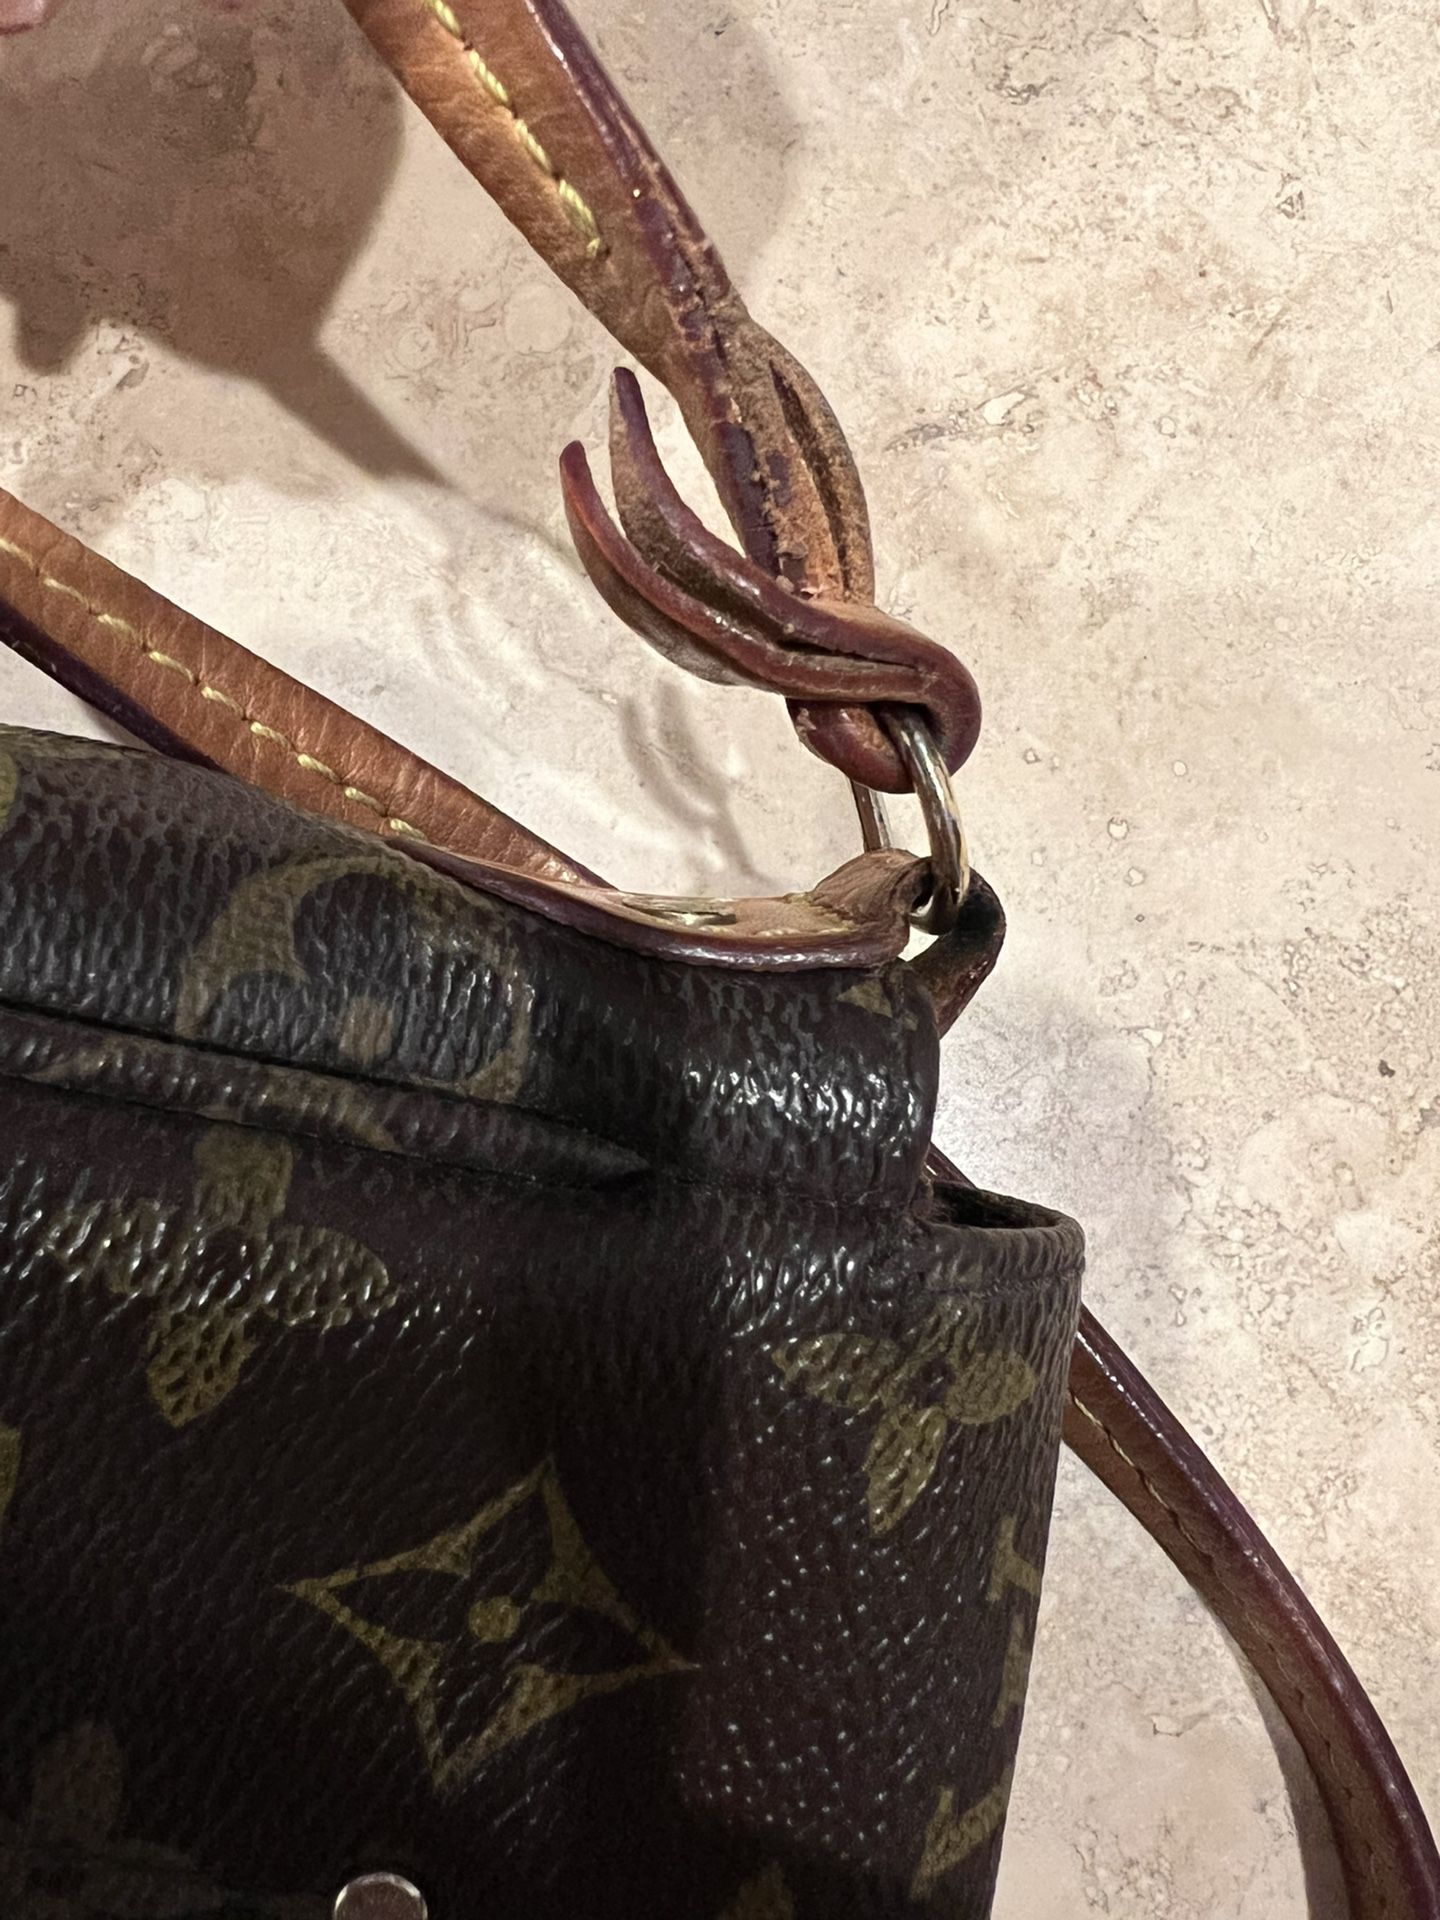 Louis Vuitton Eden Neo handbag for Sale in Newton, MA - OfferUp